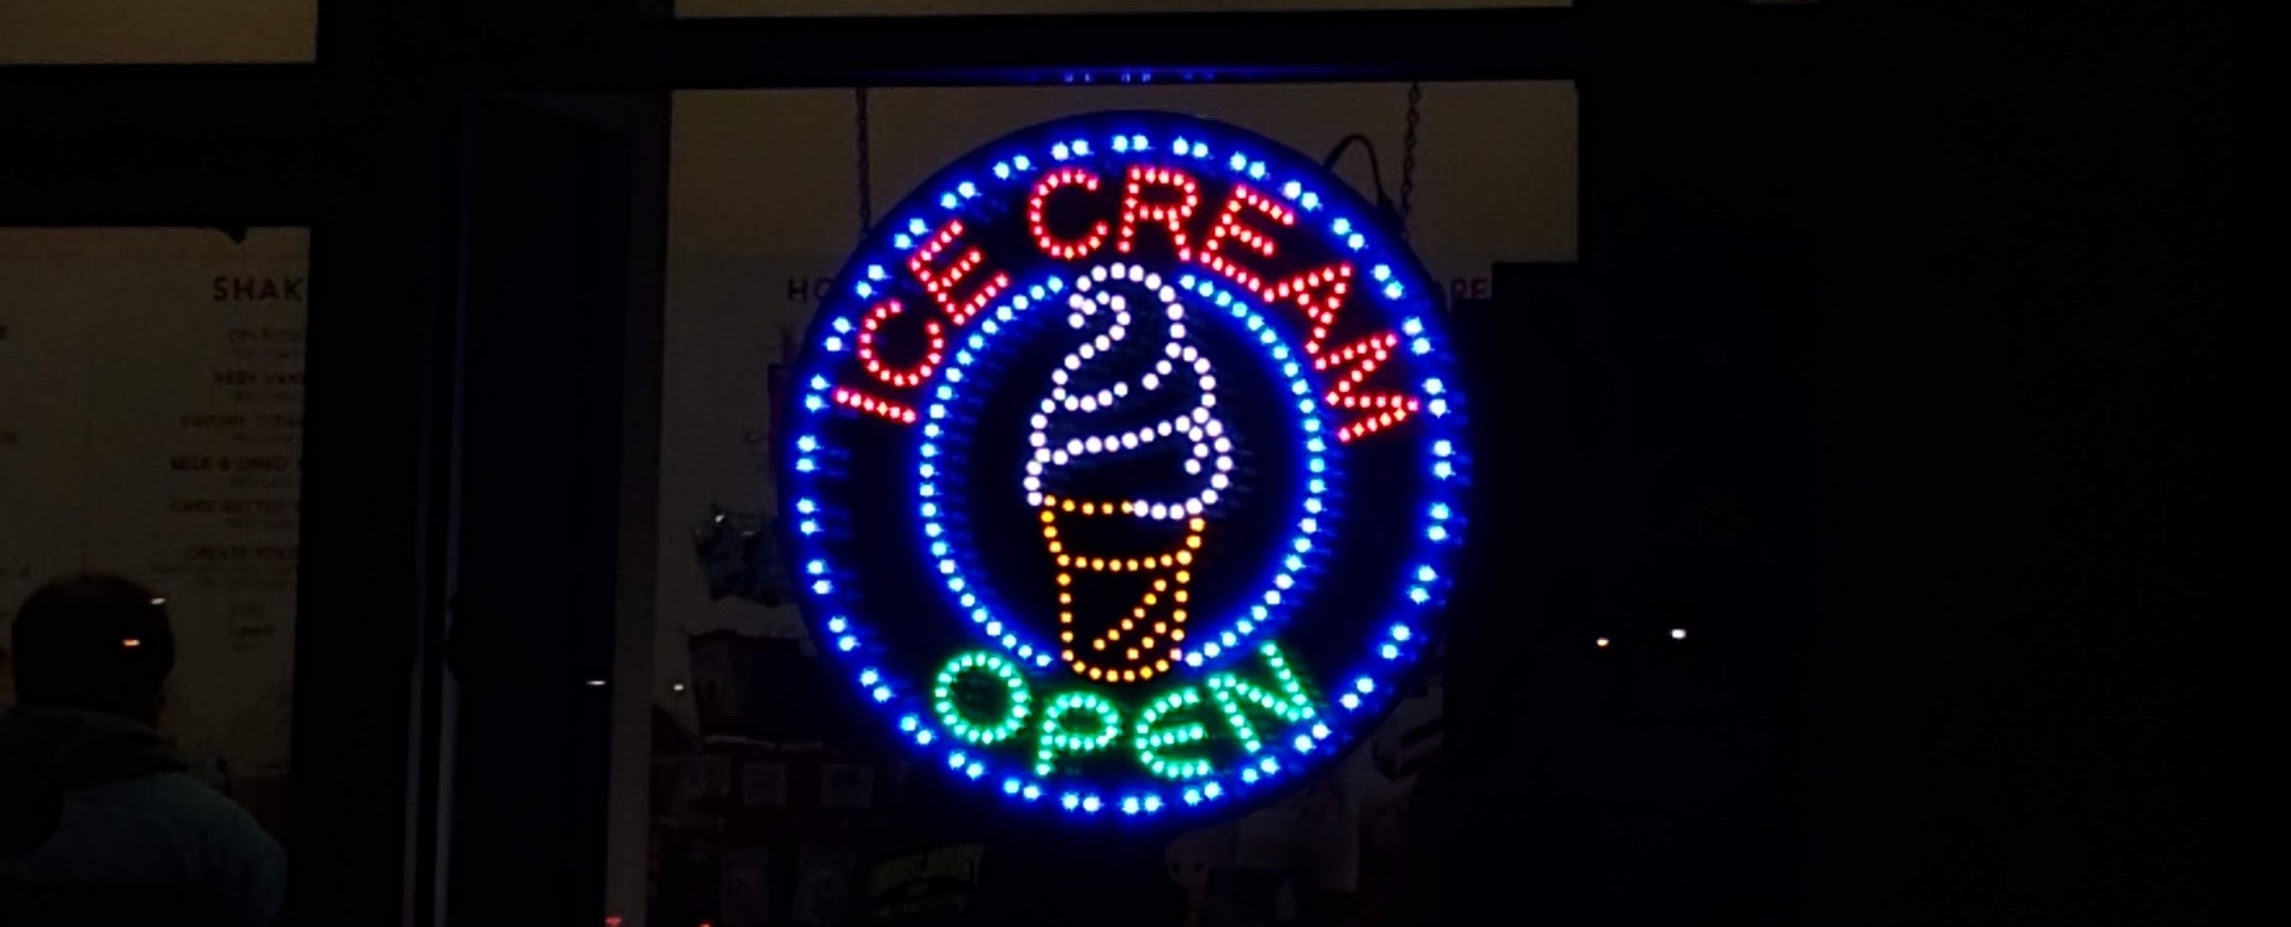 Neon 'ICE CREAM OPEN' sign from Coldstone Creamery